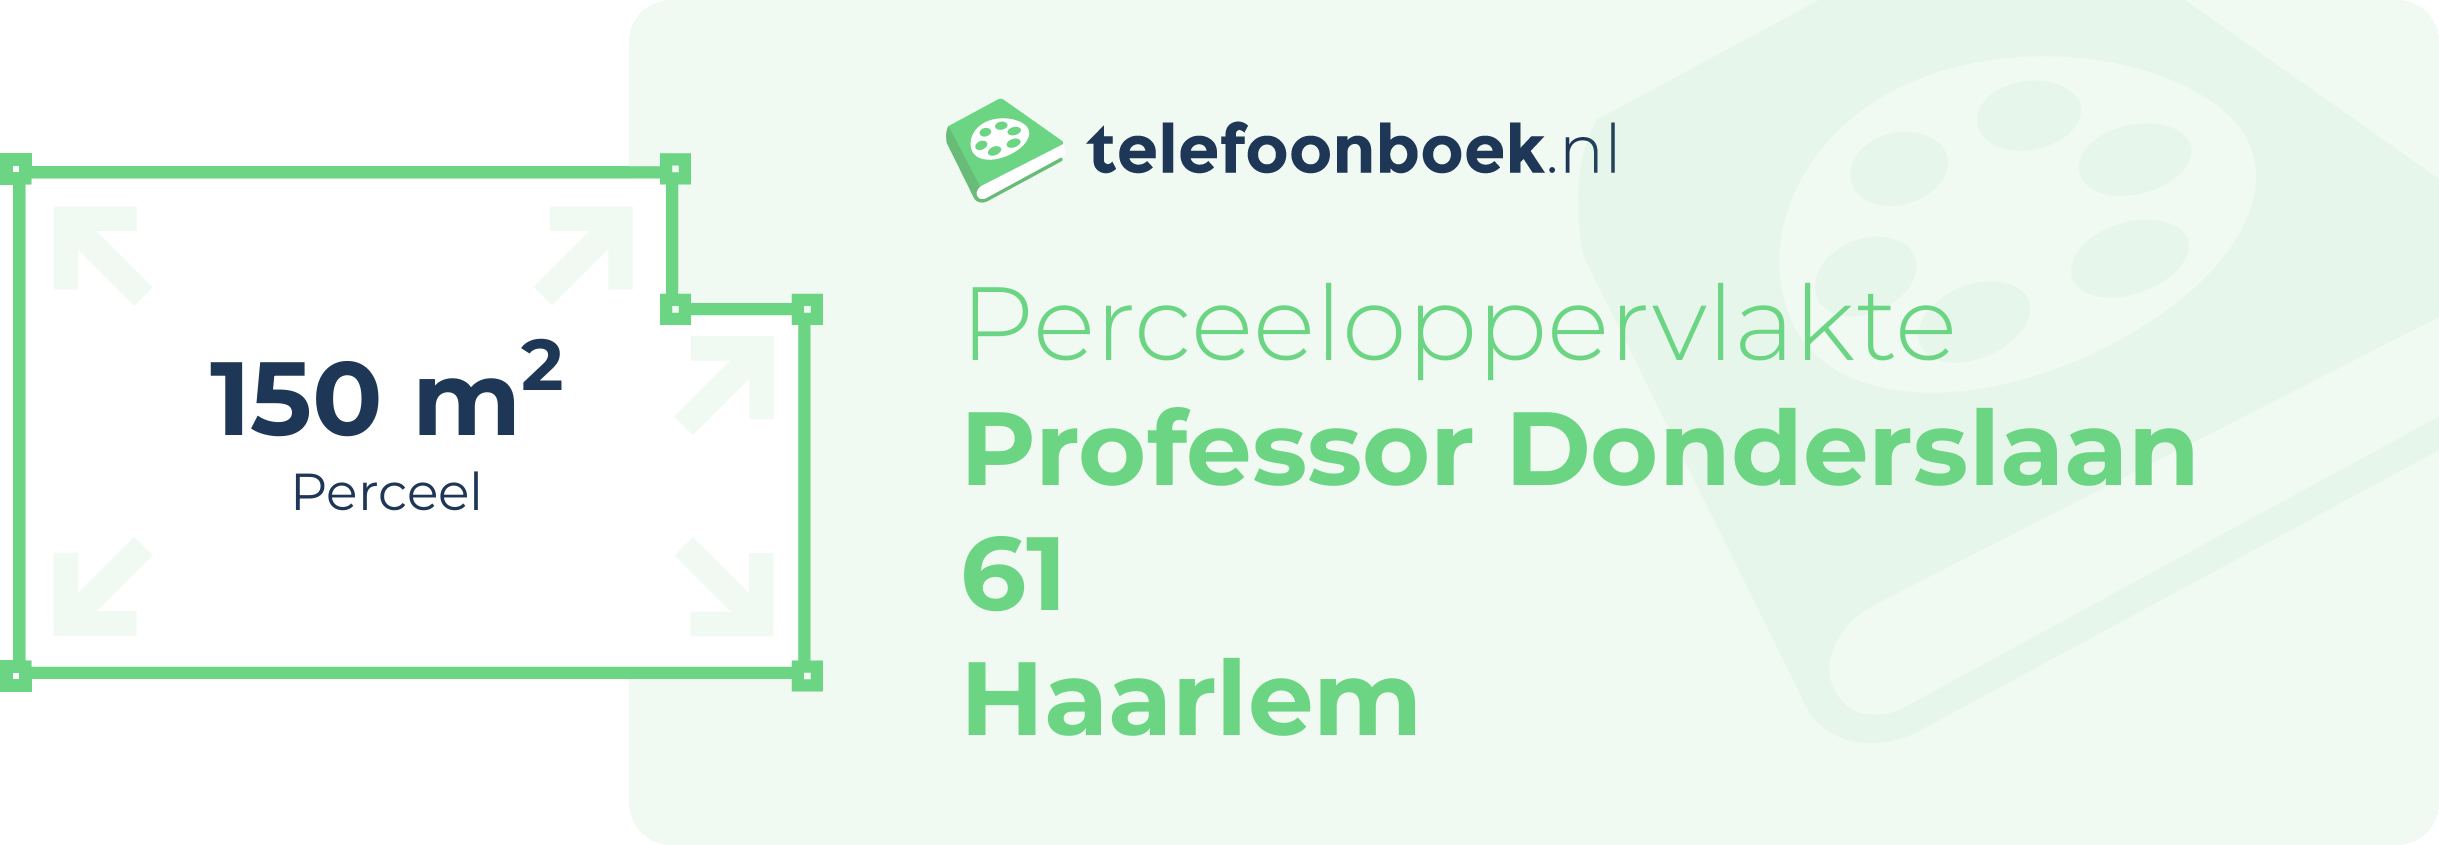 Perceeloppervlakte Professor Donderslaan 61 Haarlem